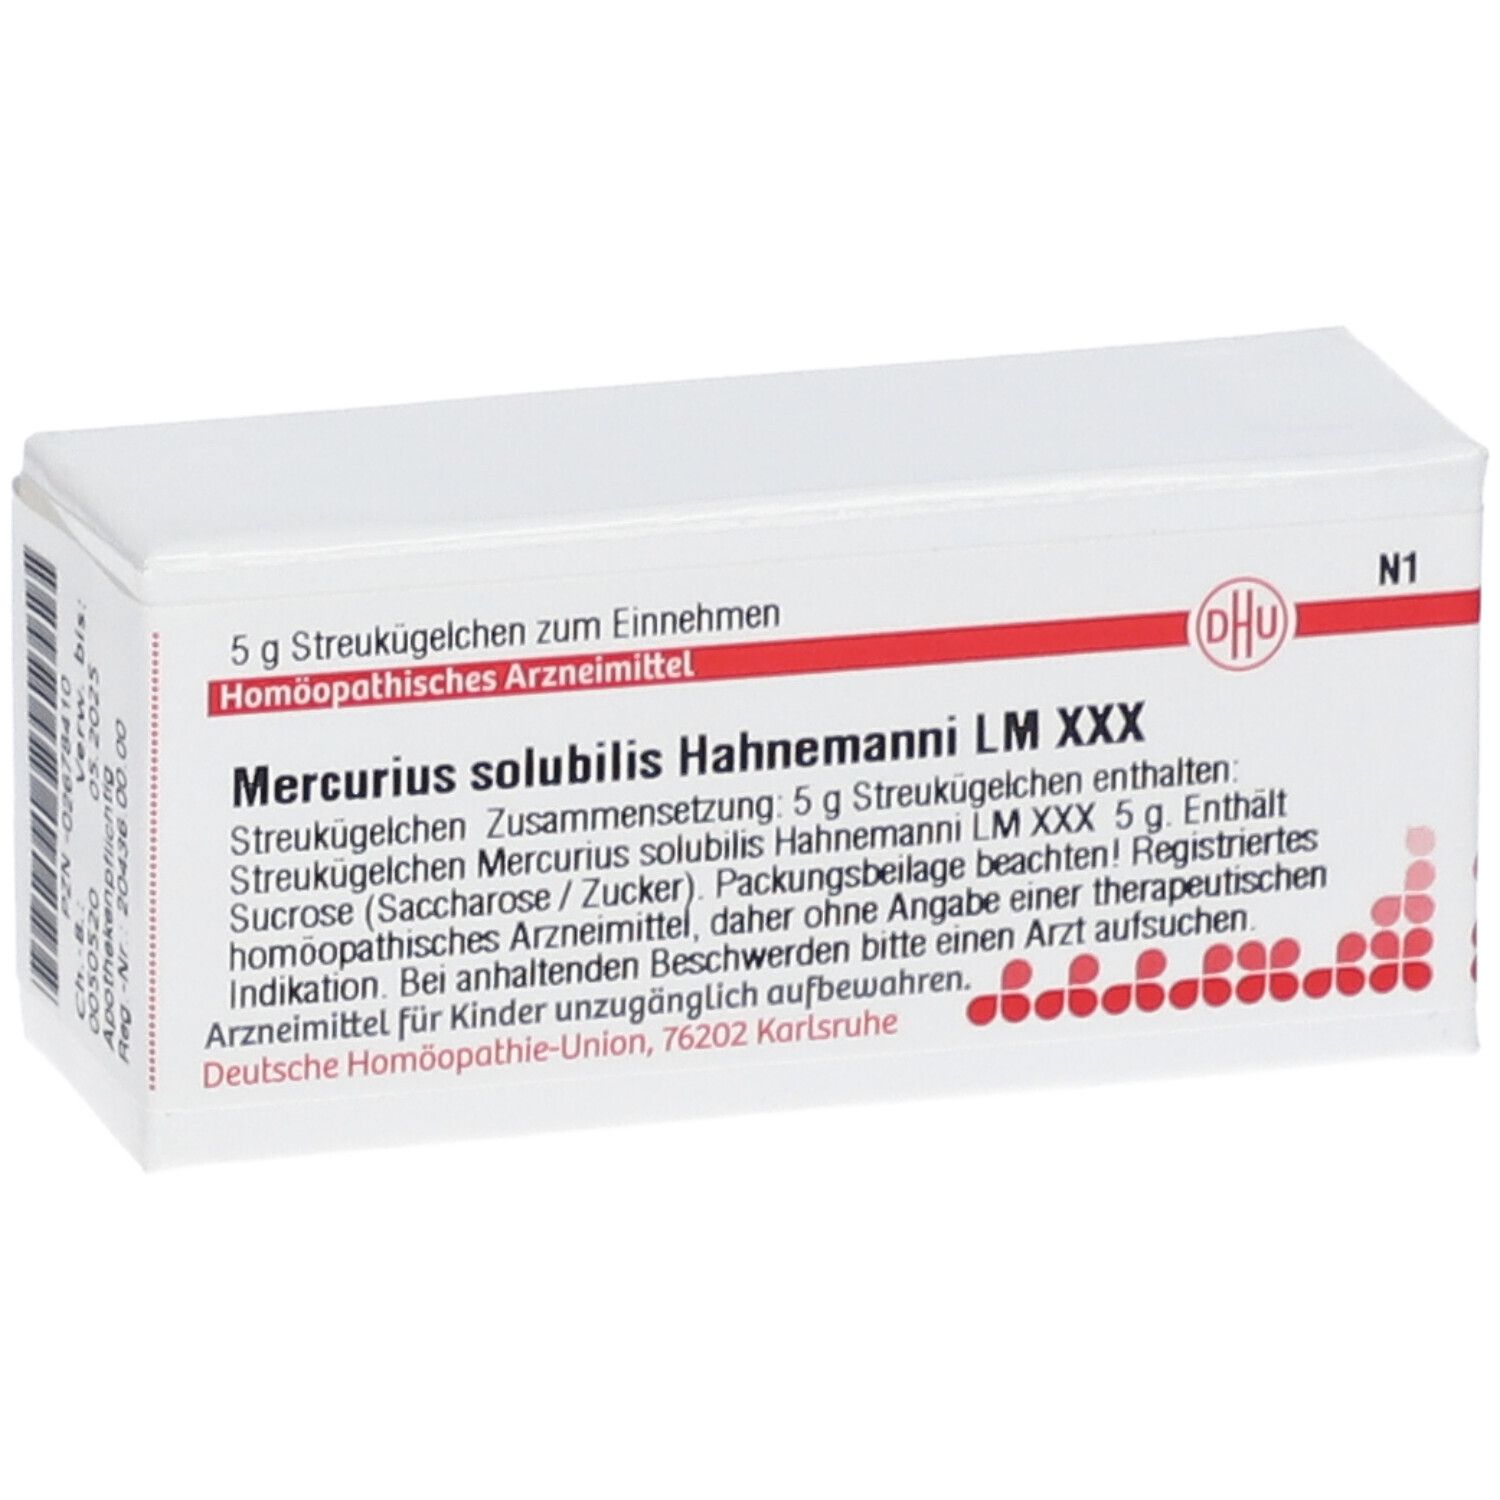 DHU Mercurius Solubilis Hahnemanni LM XXX